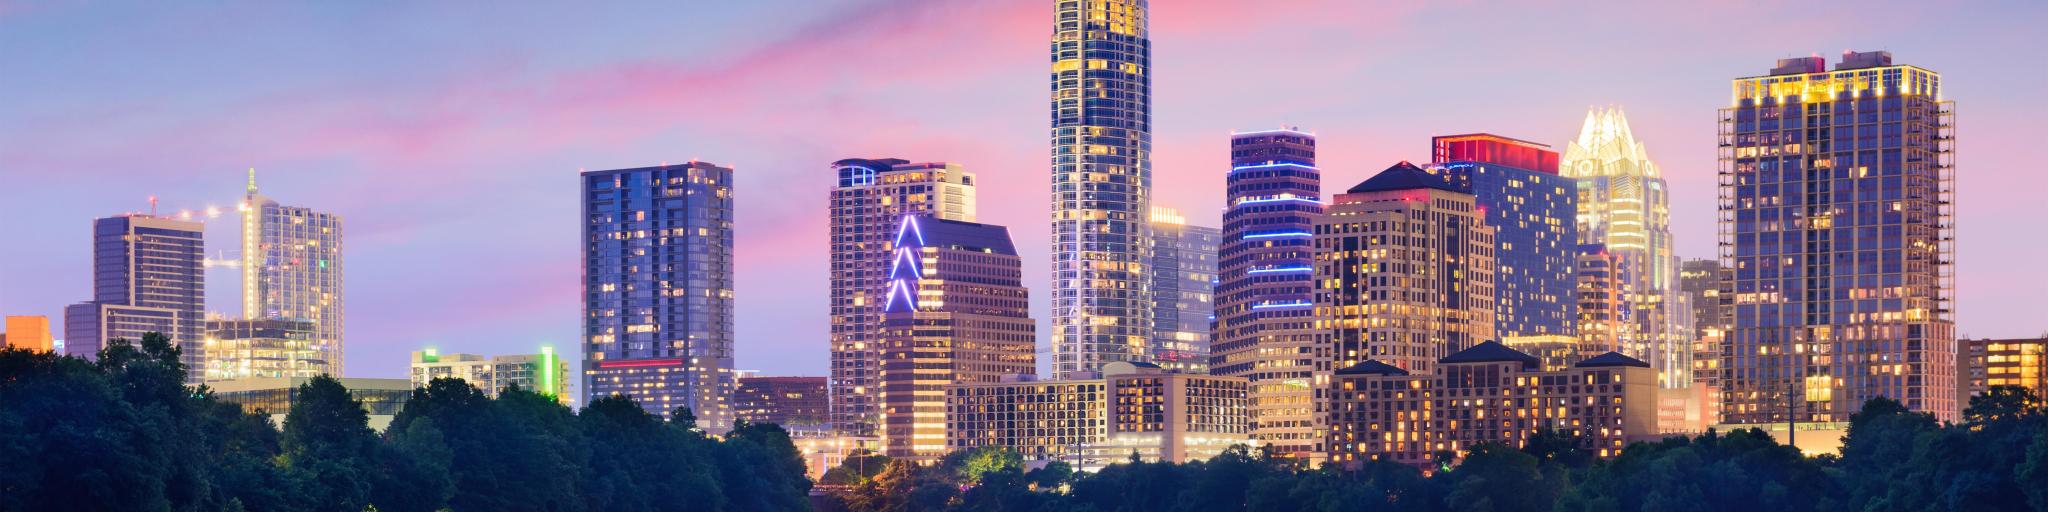 Austin, Texas, USA downtown skyline on the Colorado River at night.